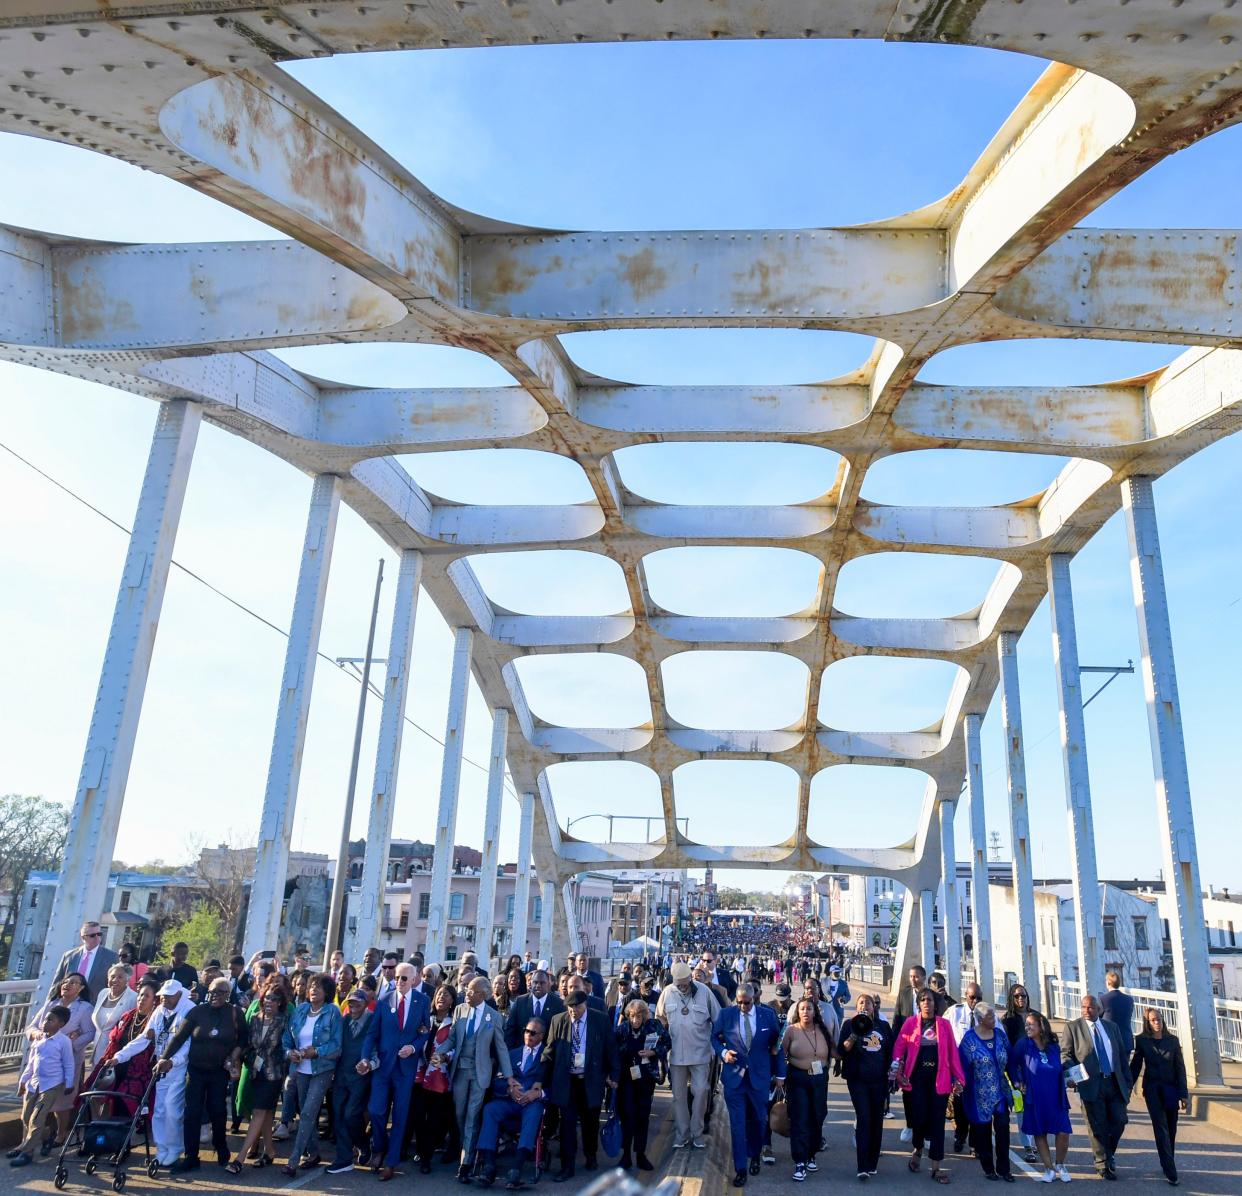 President Joe Biden, left center, marches across the Edmund Pettus Bridge in Selma, Alabama, on Sunday March 5, 2023, to commemorate the 58th anniversary of the "Bloody Sunday" bridge crossing.